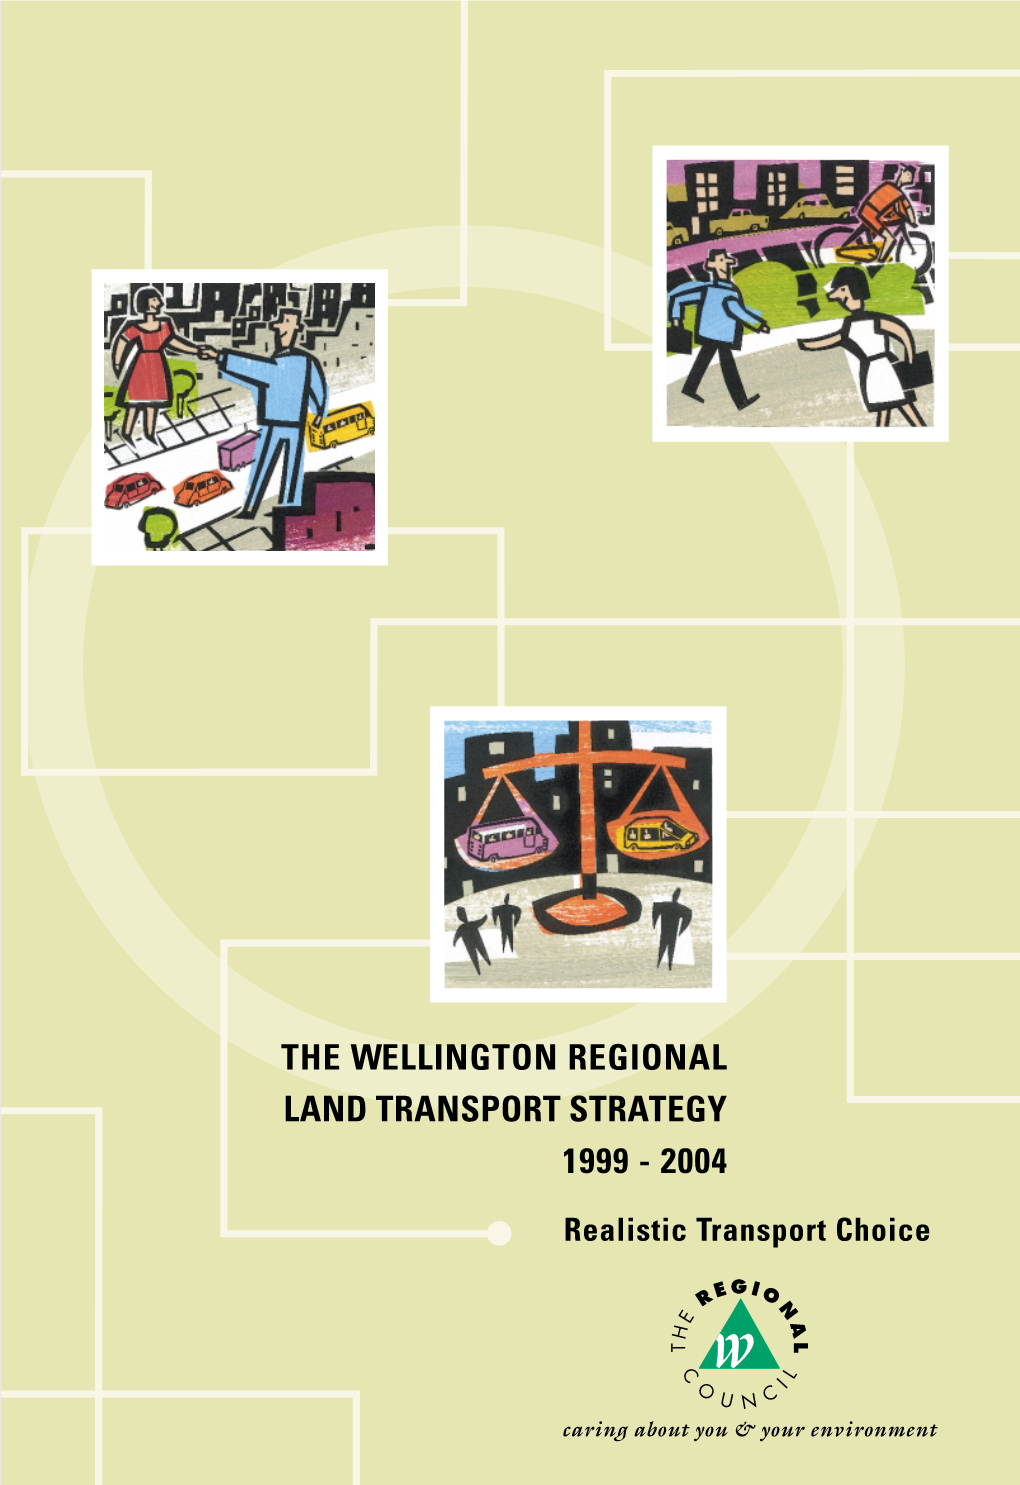 The Wellington Regional Land Transport Strategy